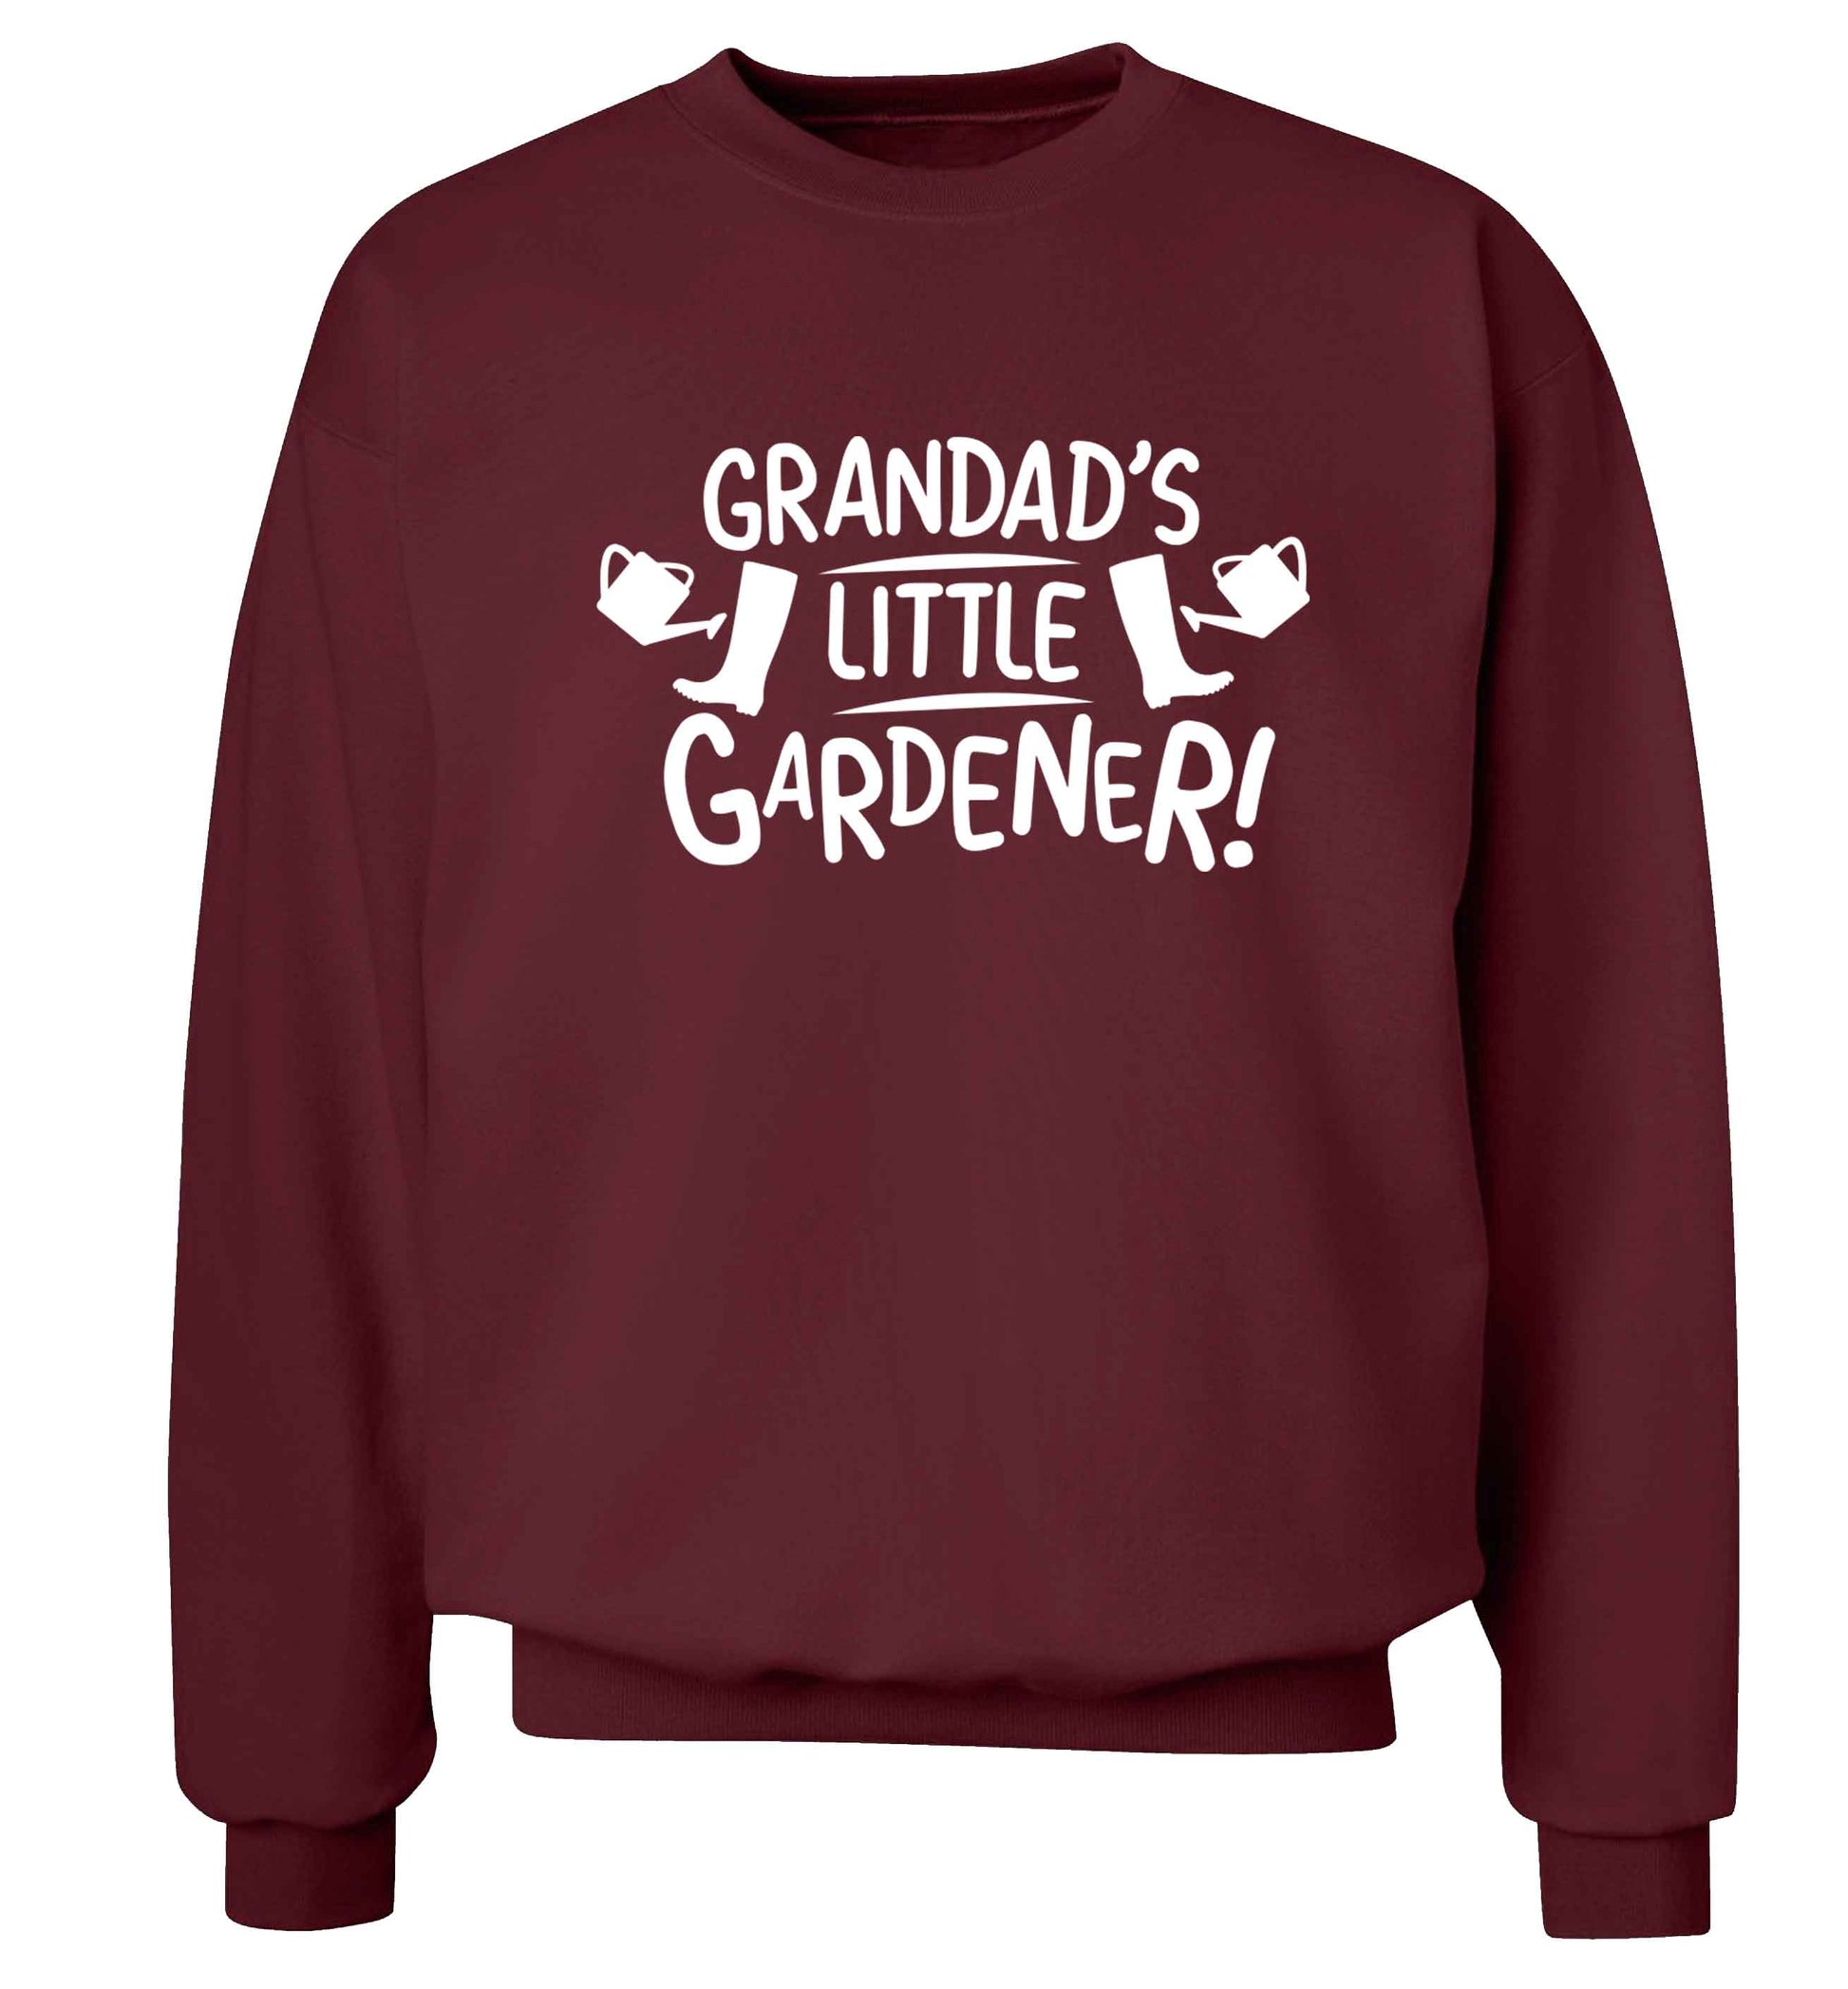 Grandad's little gardener Adult's unisex maroon Sweater 2XL